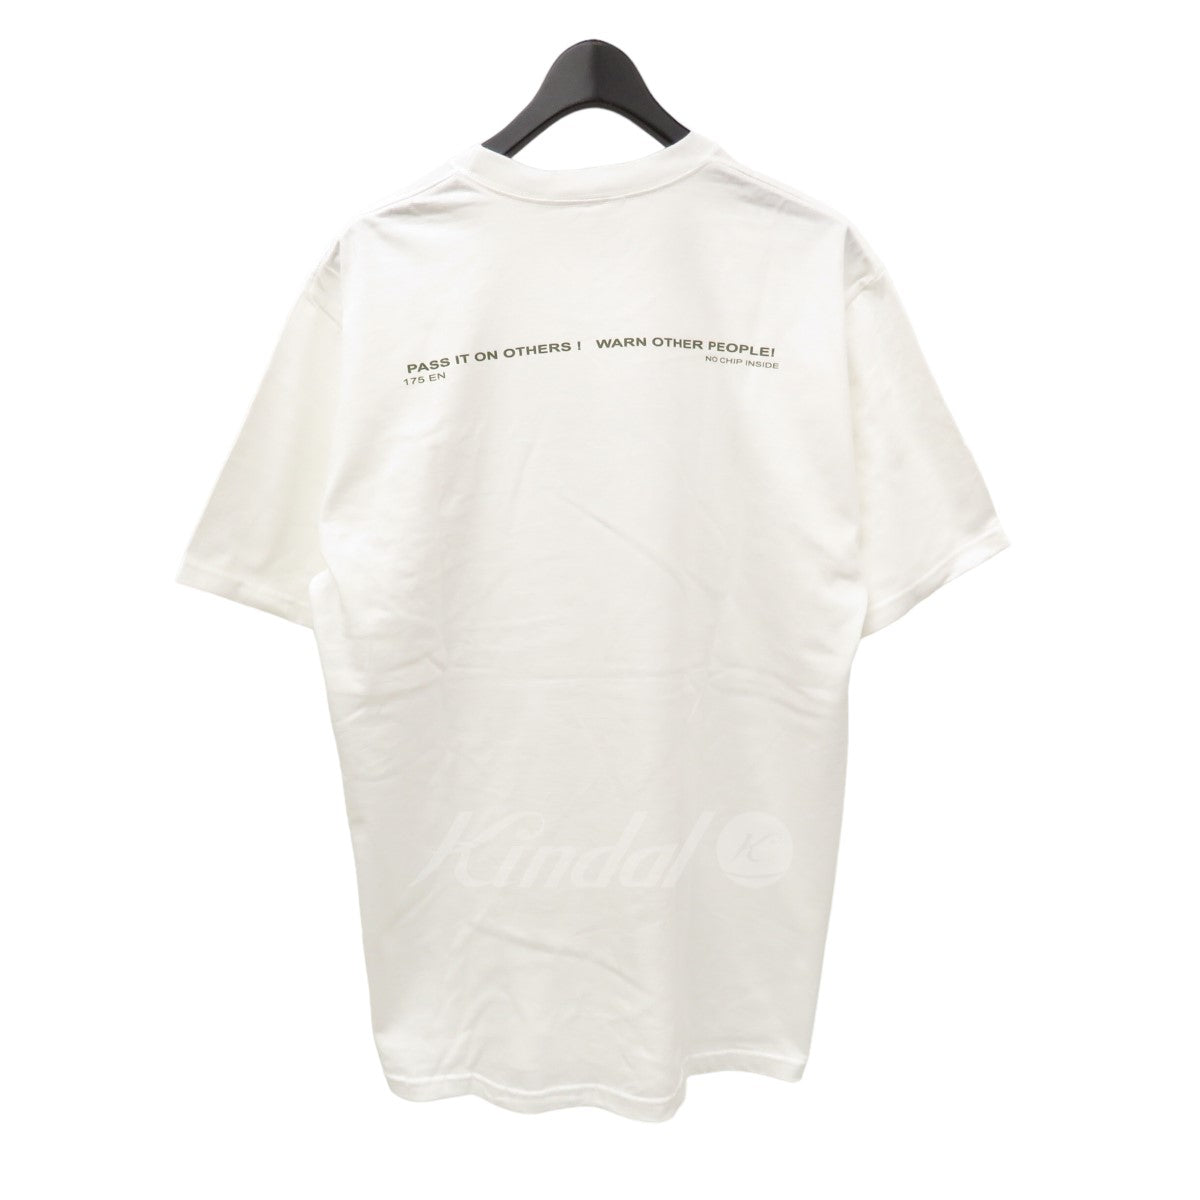 Spreme一覧はコチラです♪【即完売】シュプリーム☆WarningセンターロゴTシャツ入手困難Lホワイト